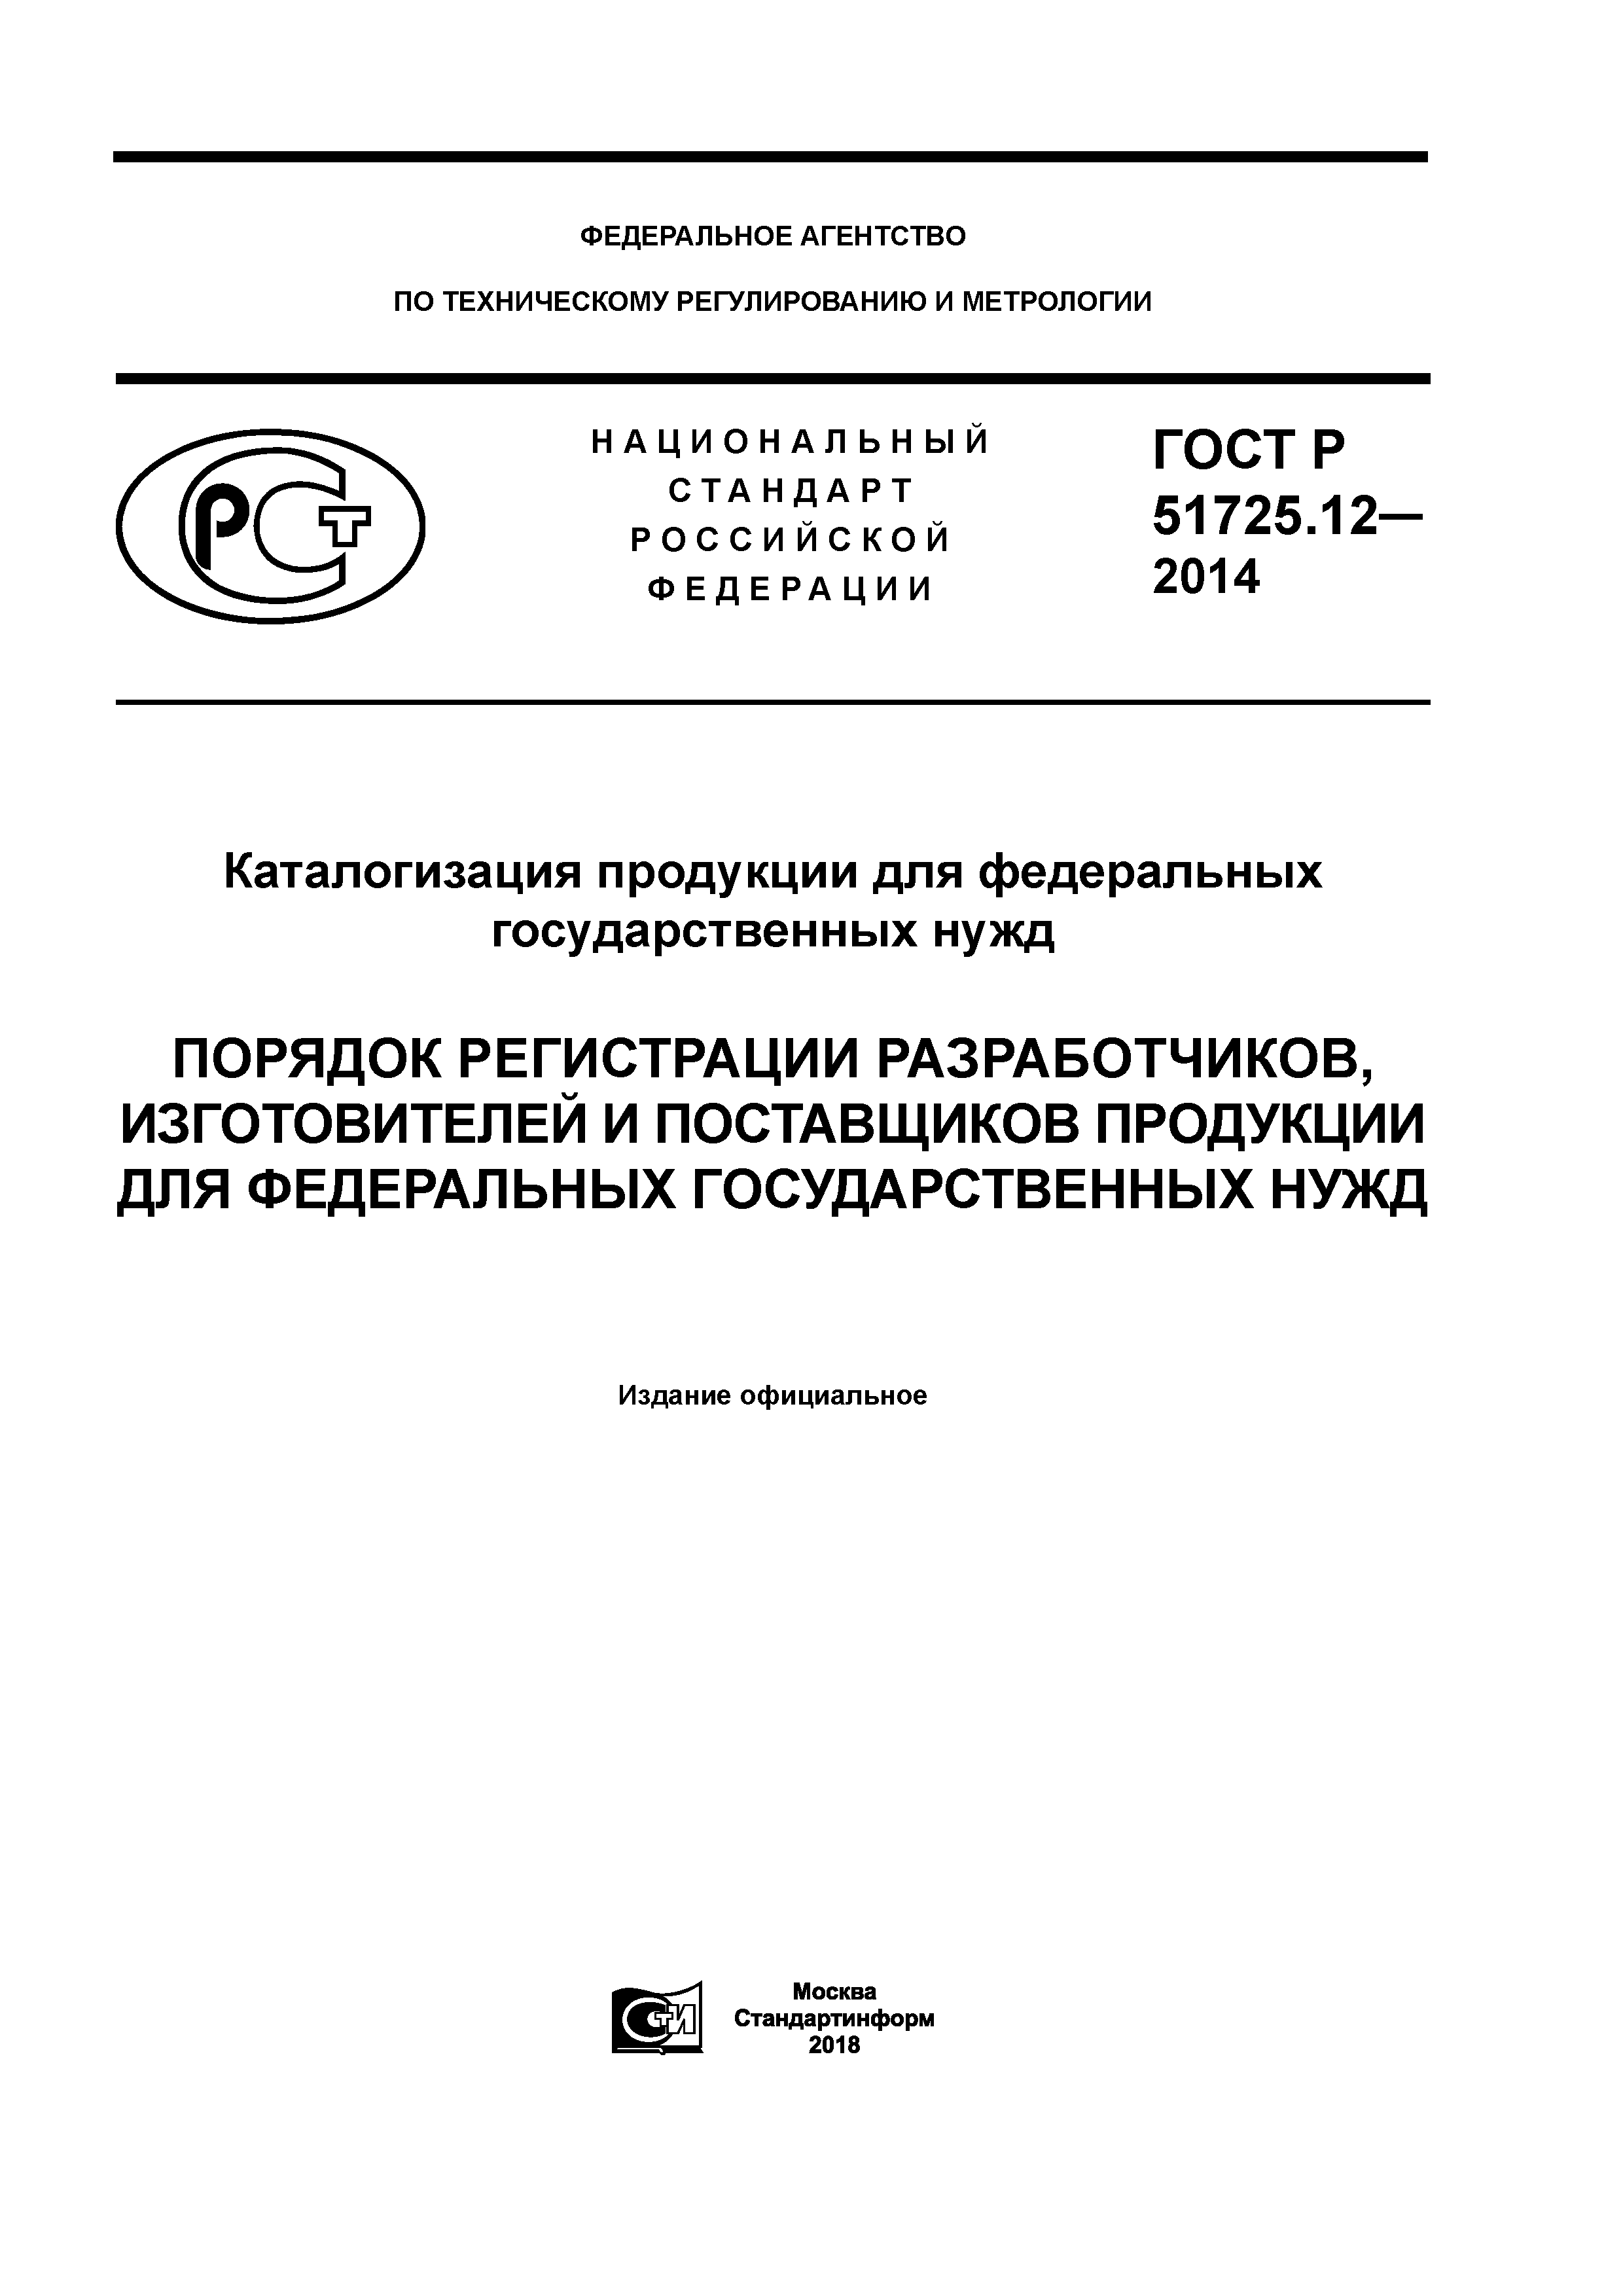 ГОСТ Р 51725.12-2014